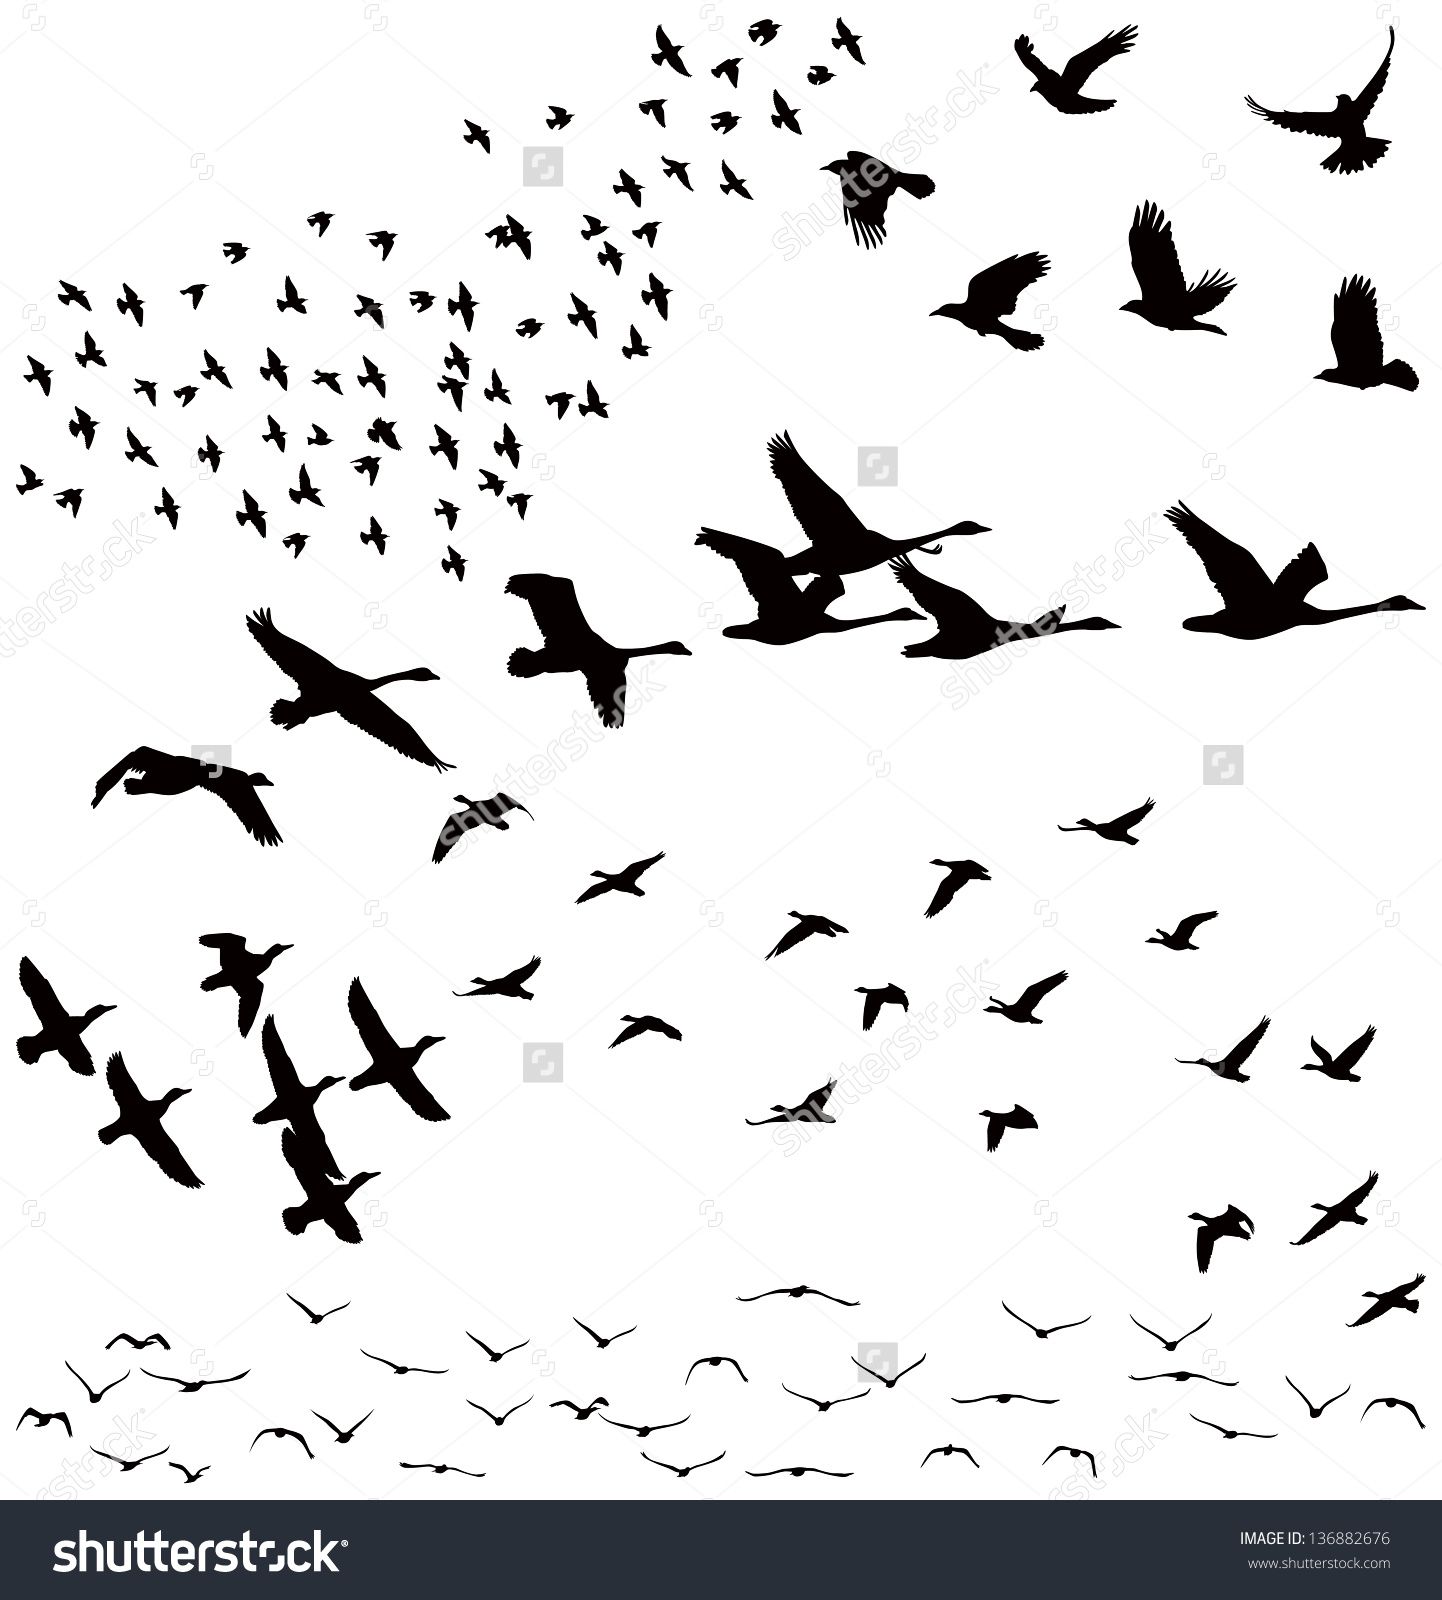 Silhouette of flock of birds photo